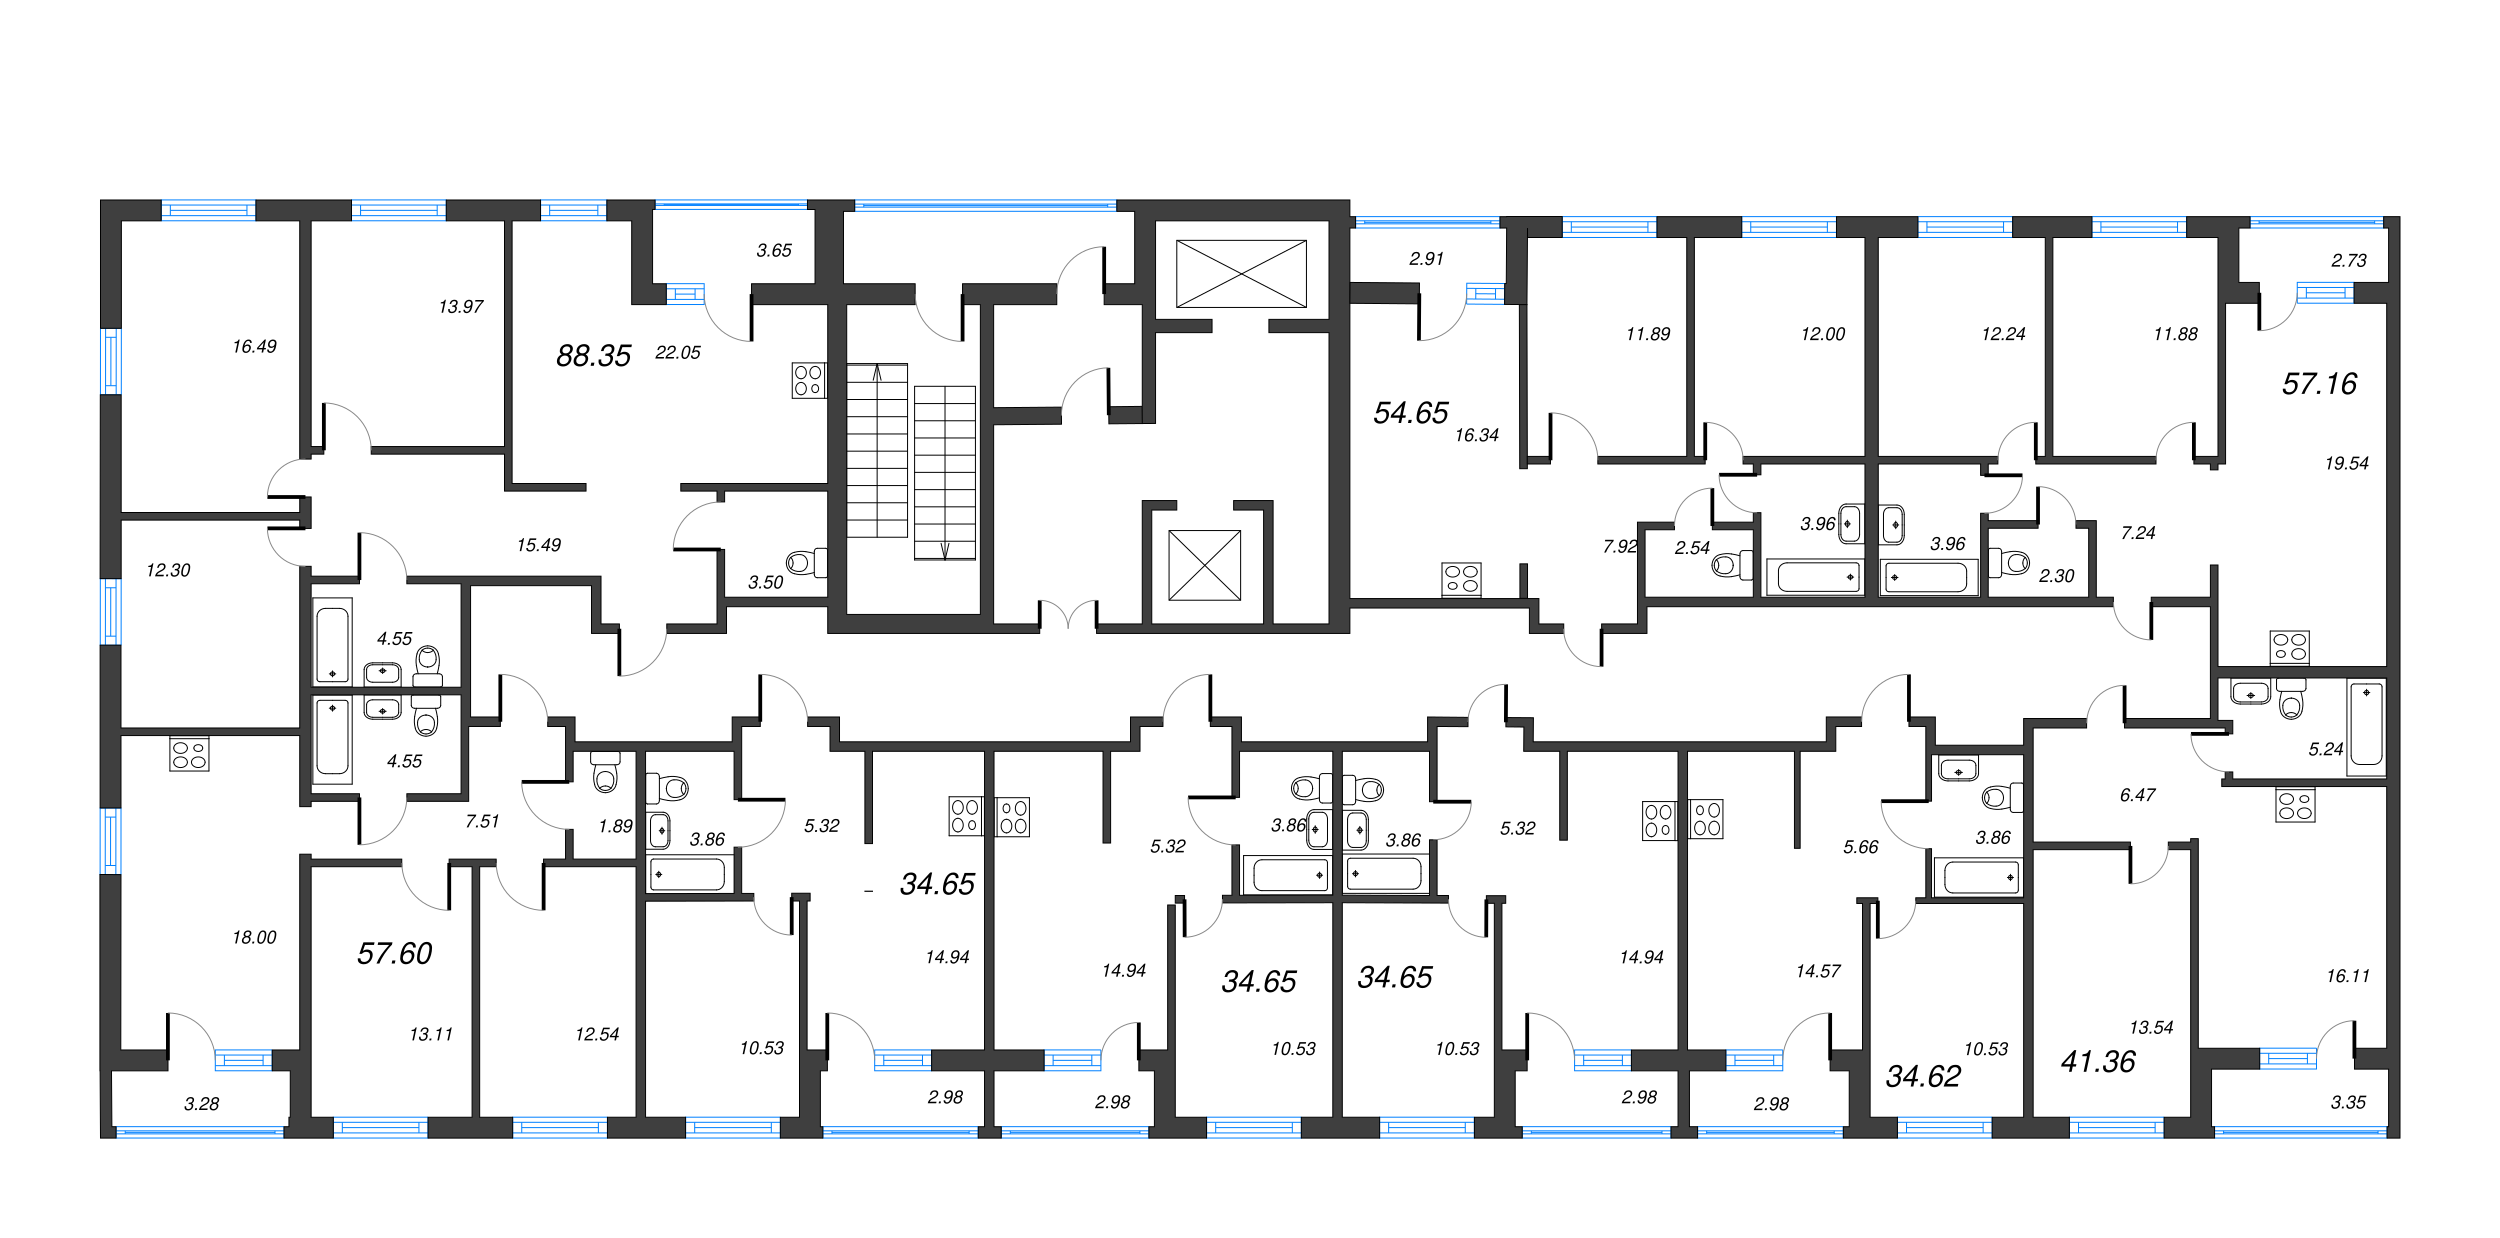 2-комнатная (Евро) квартира, 41.36 м² - планировка этажа